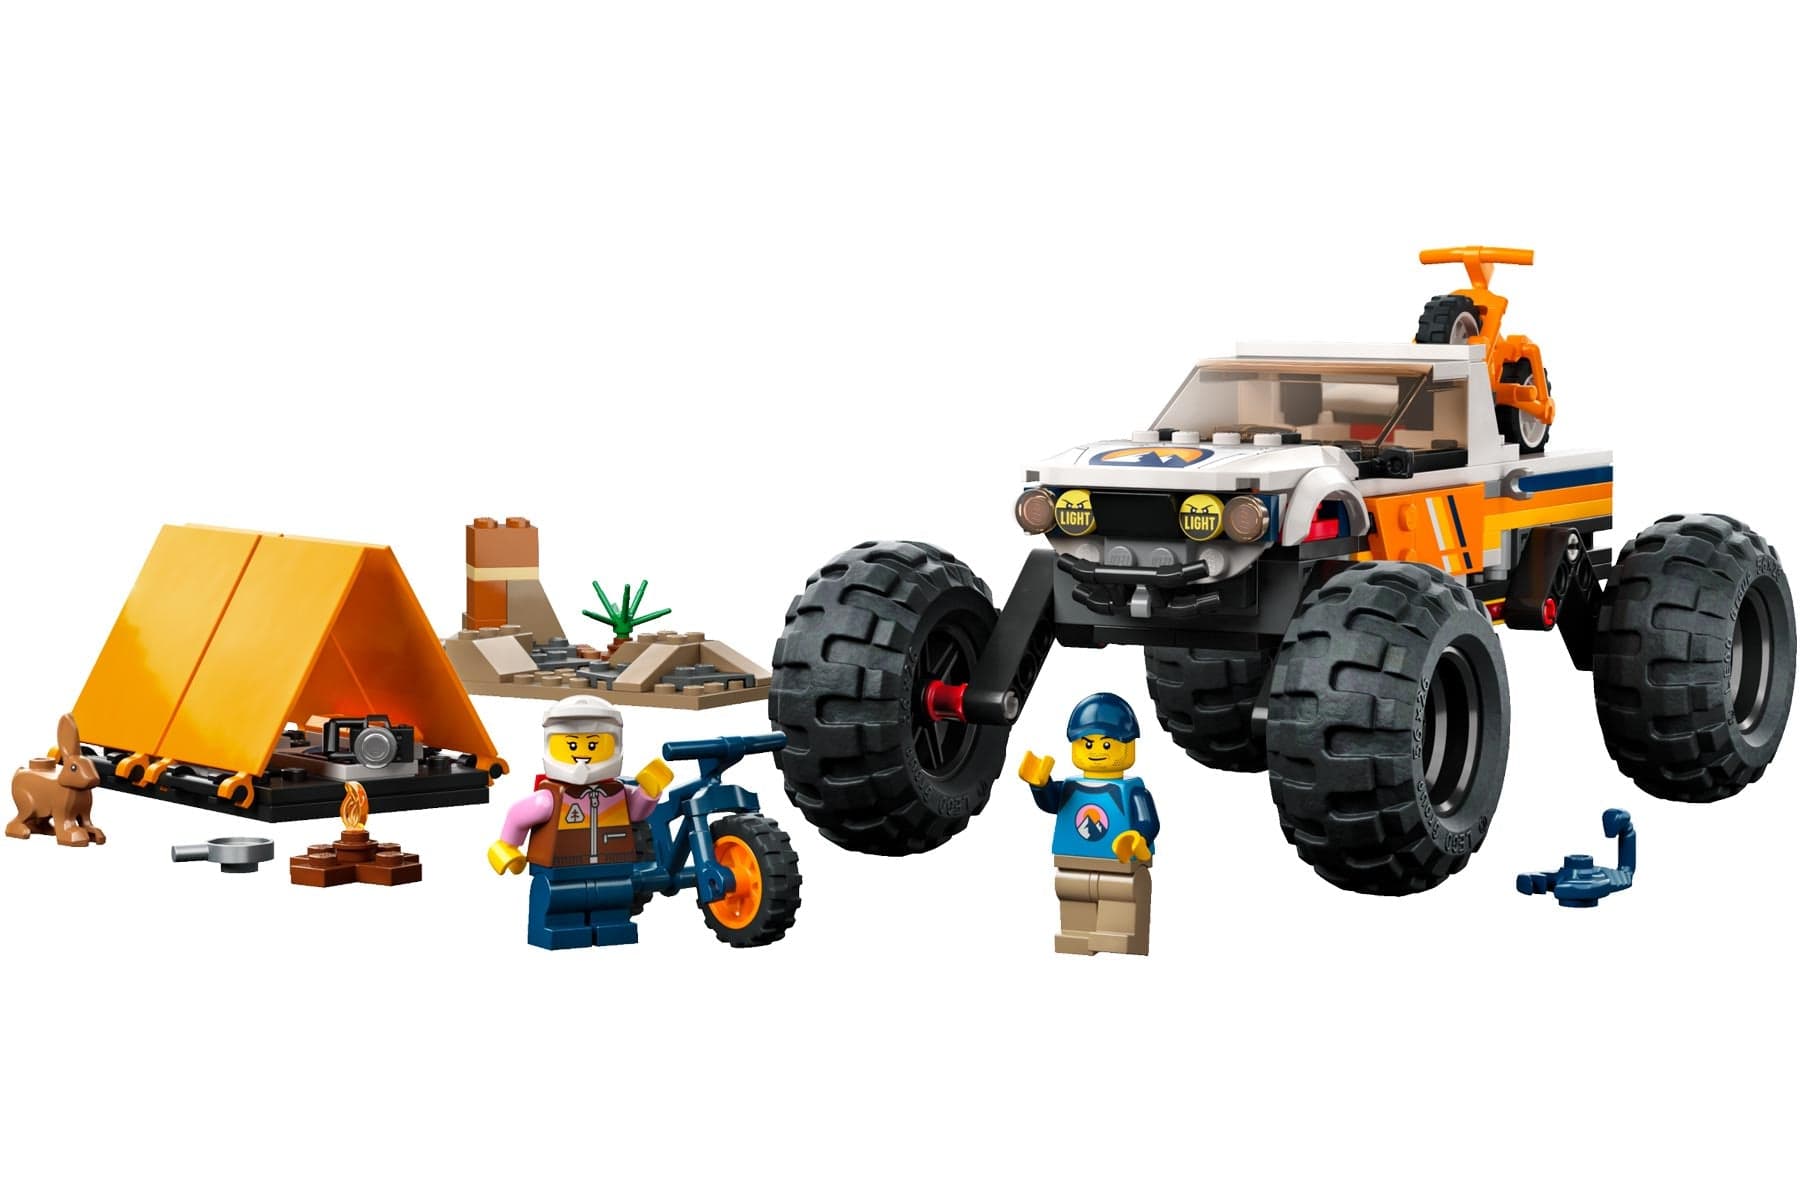 LEGO City 4x4 Off-Roader Adventures 60387